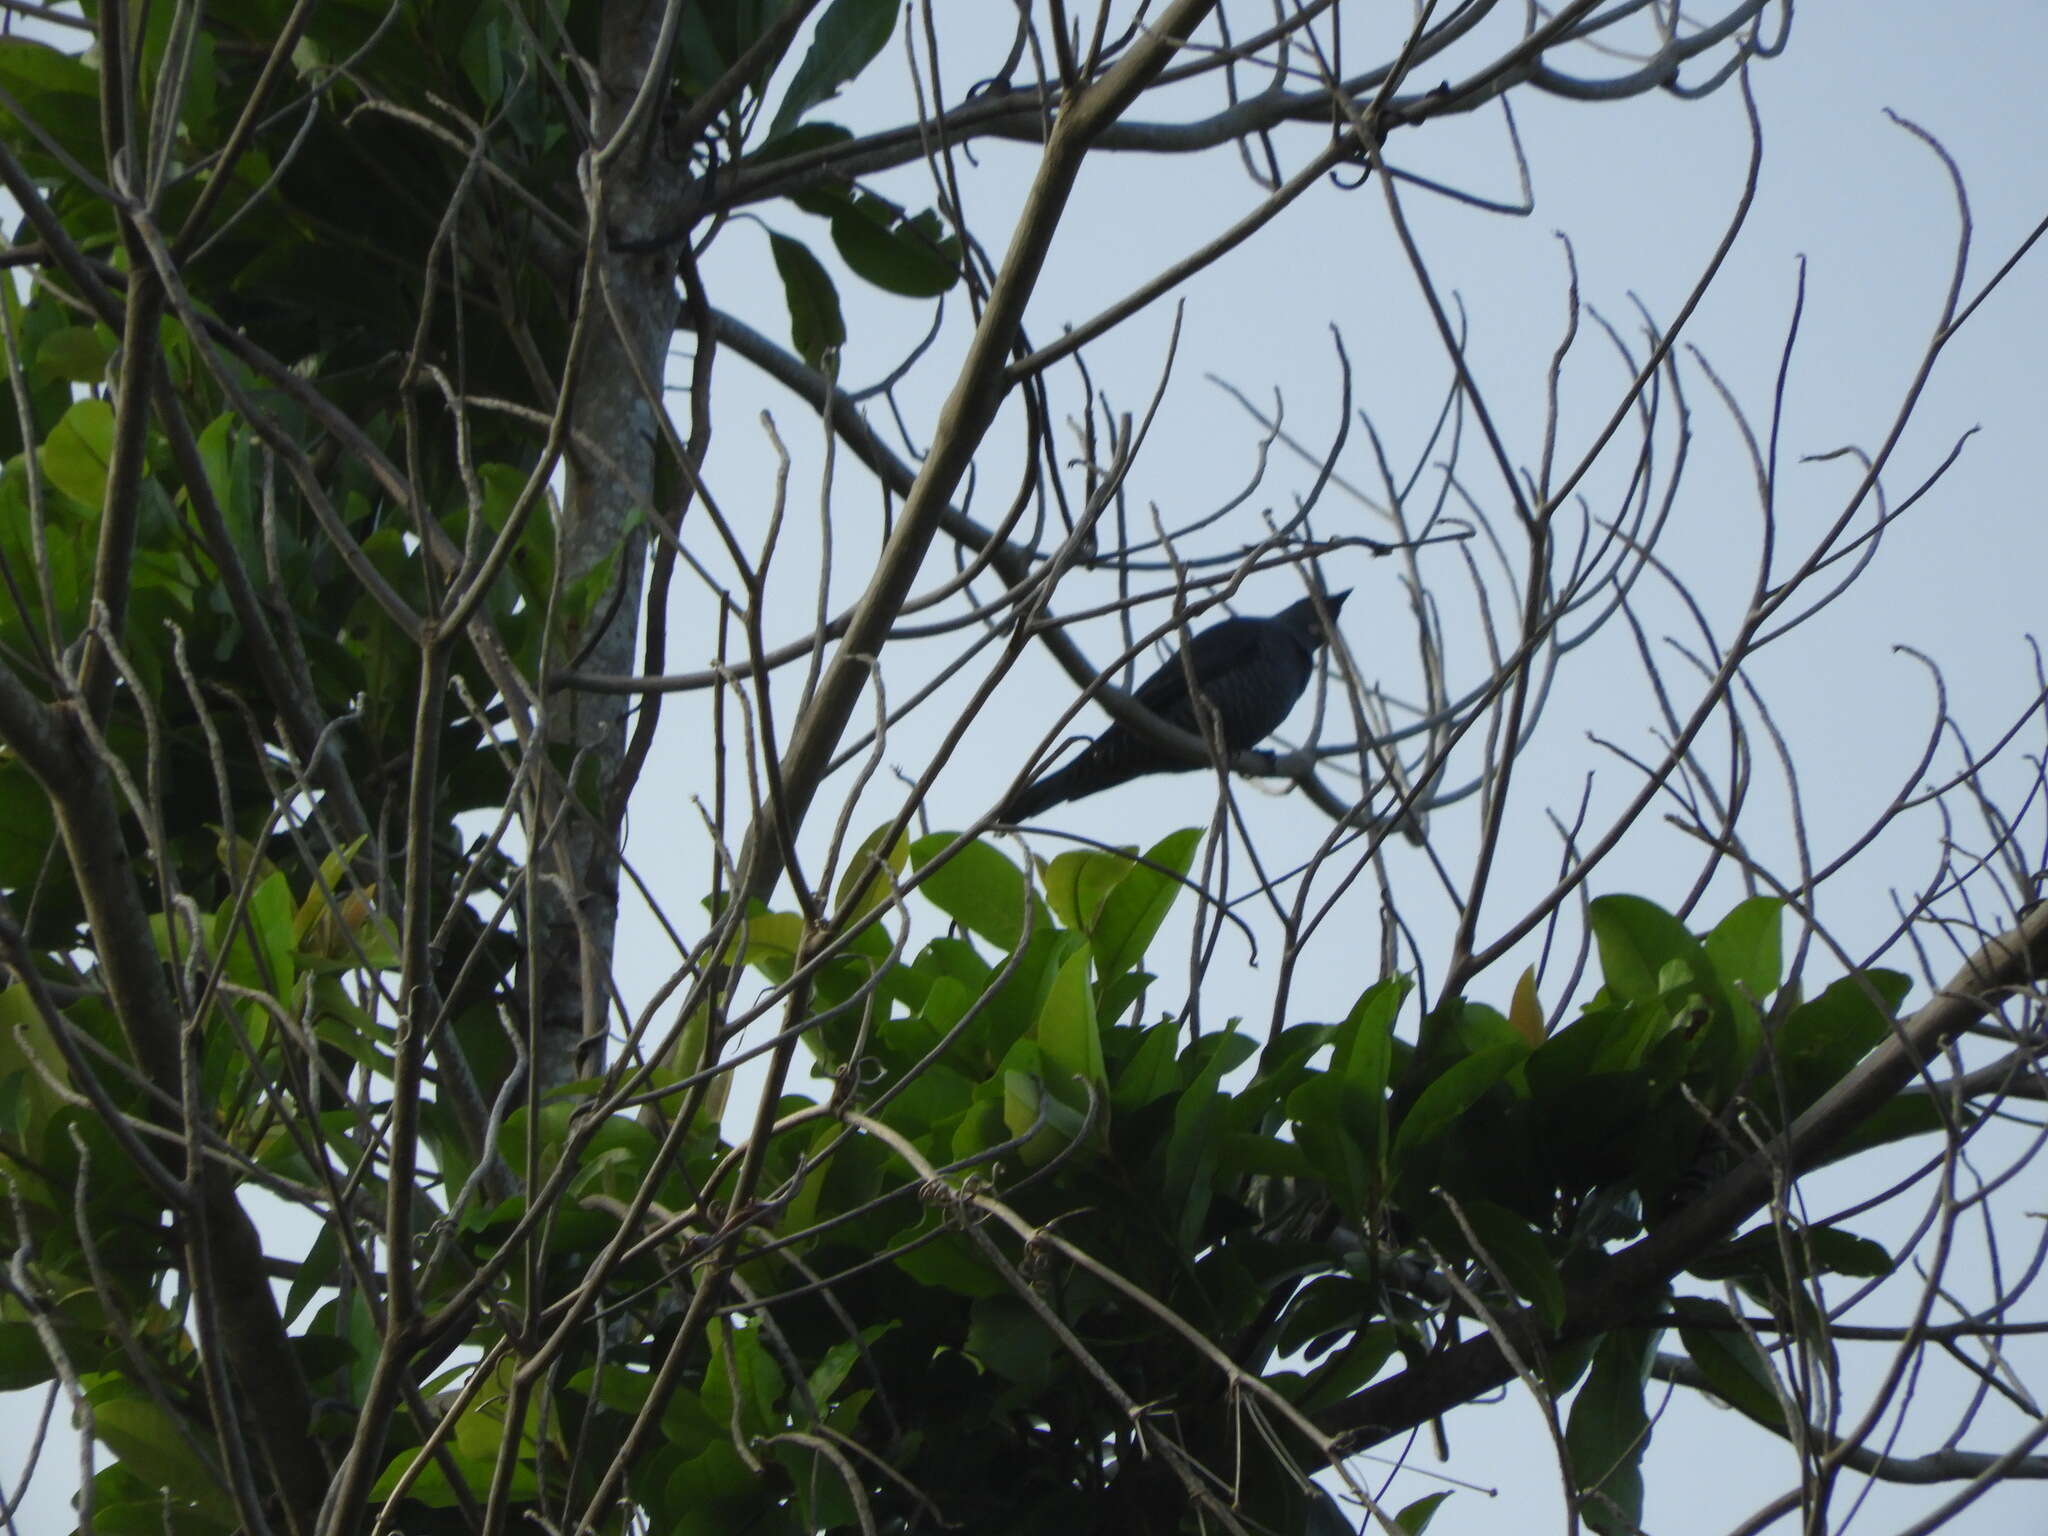 Image of Barred Cuckoo-shrike